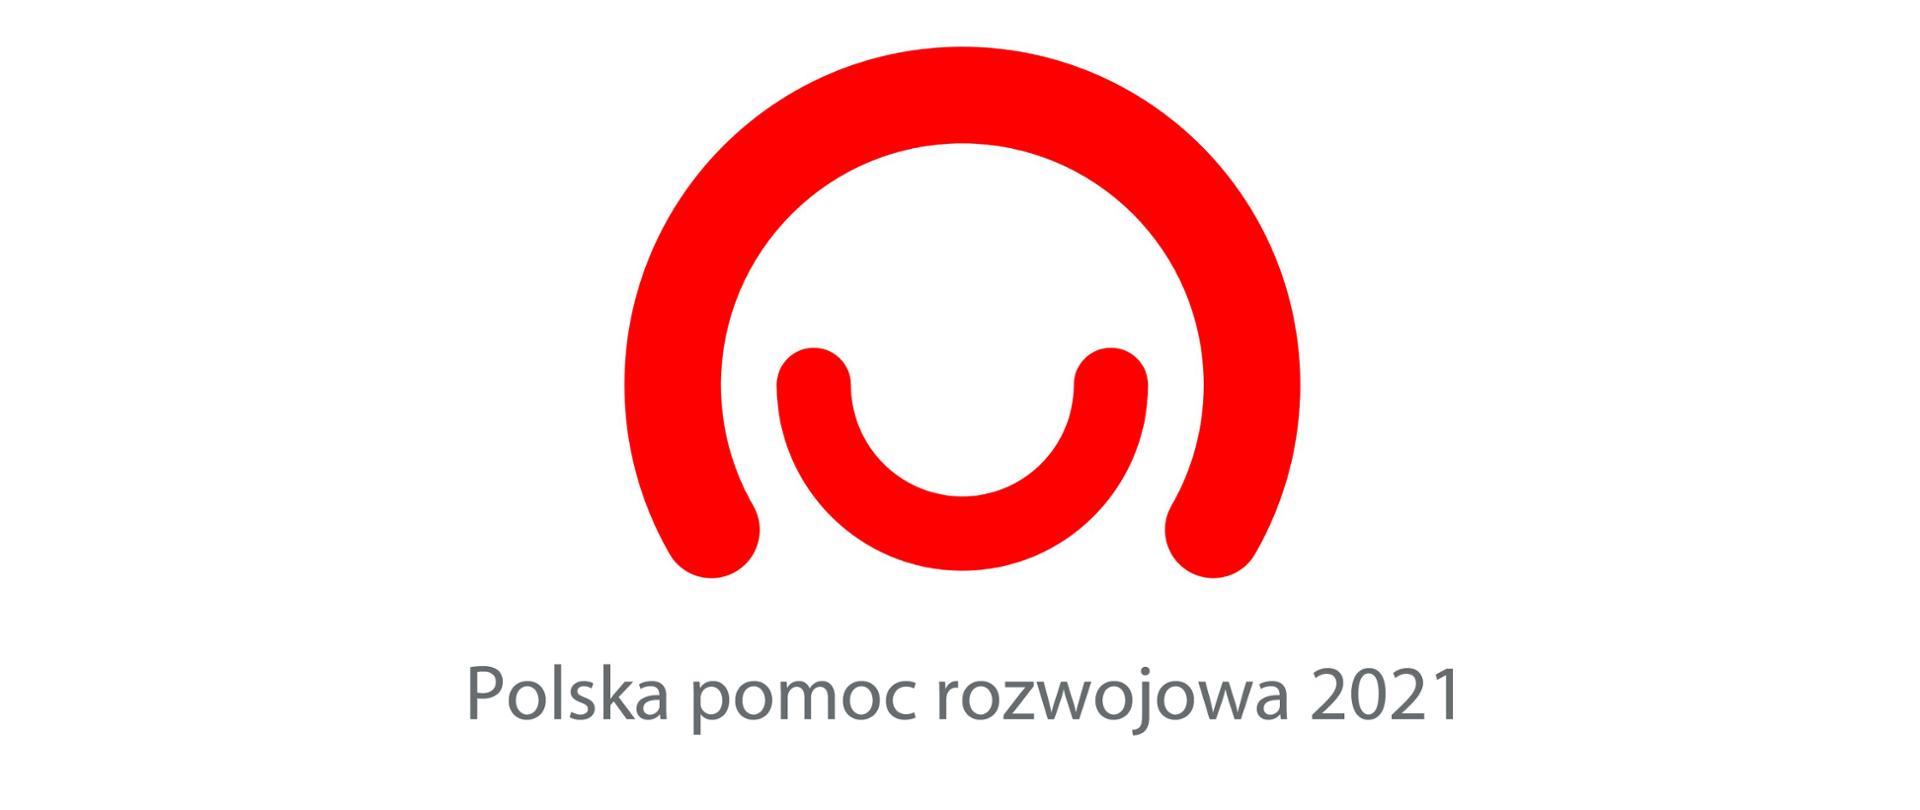 Polska pomoc rozwojowa 2021